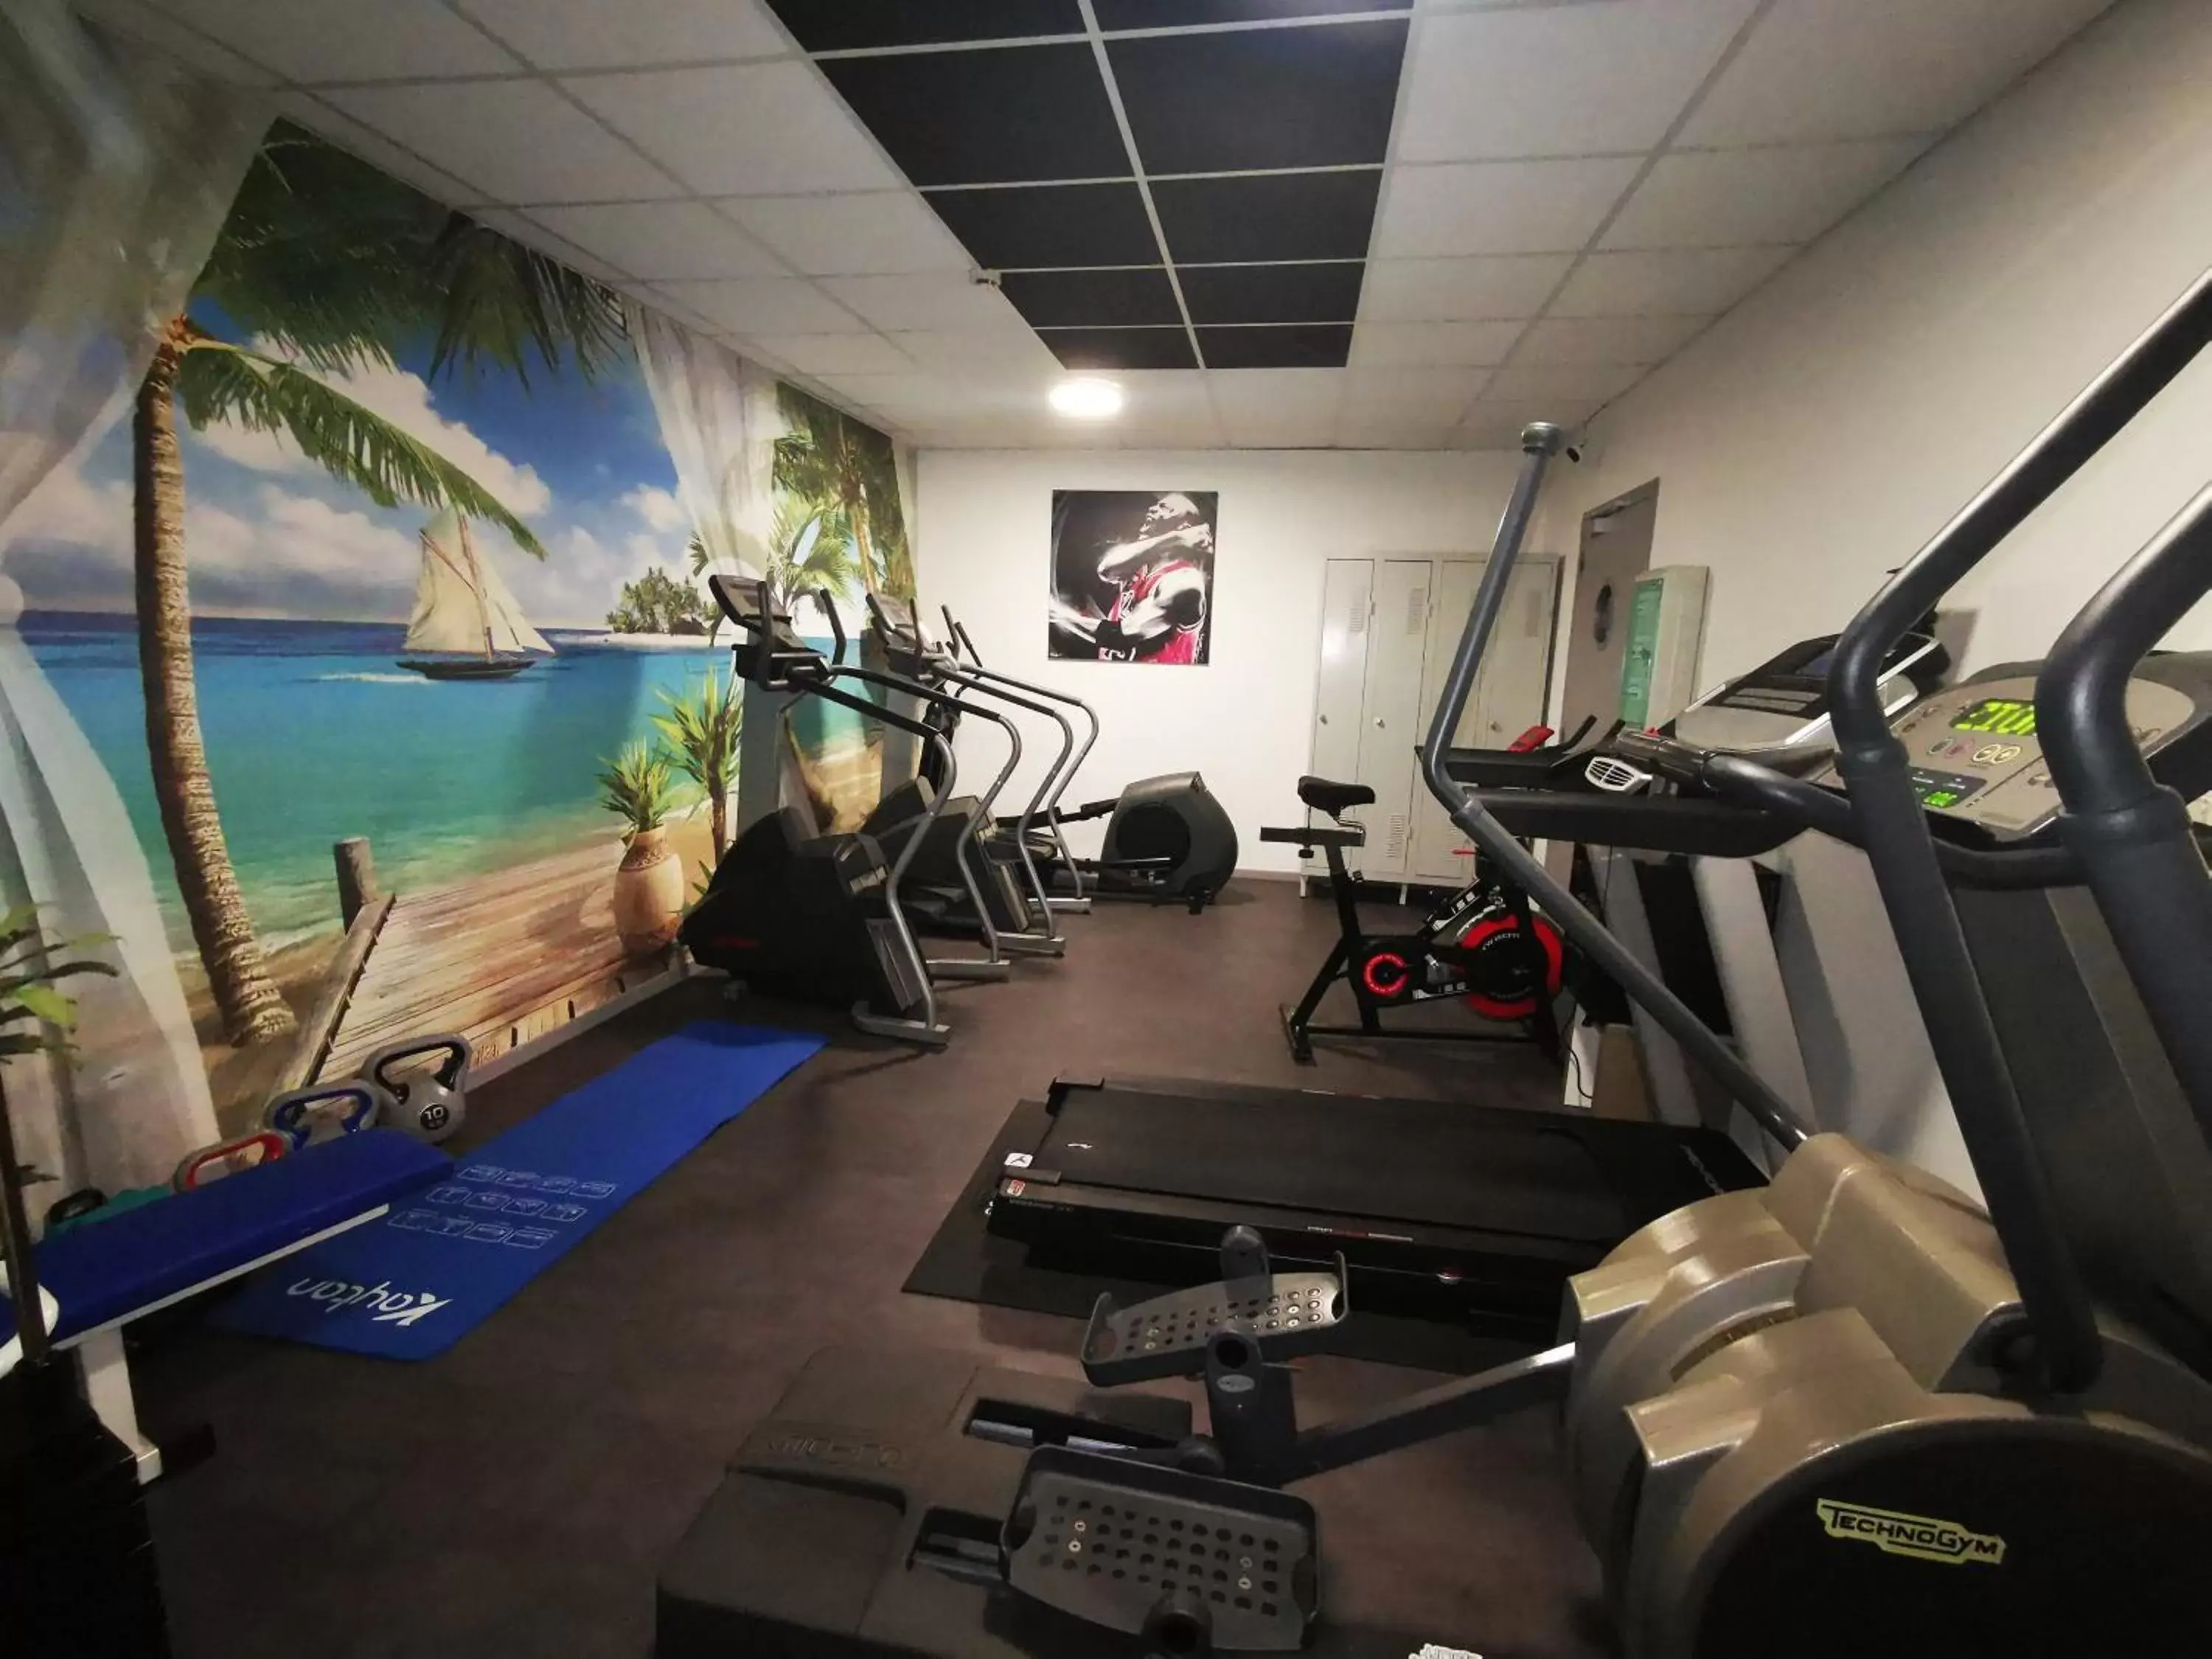 Fitness centre/facilities, Fitness Center/Facilities in HOTEL & SPA Le Renard Centre